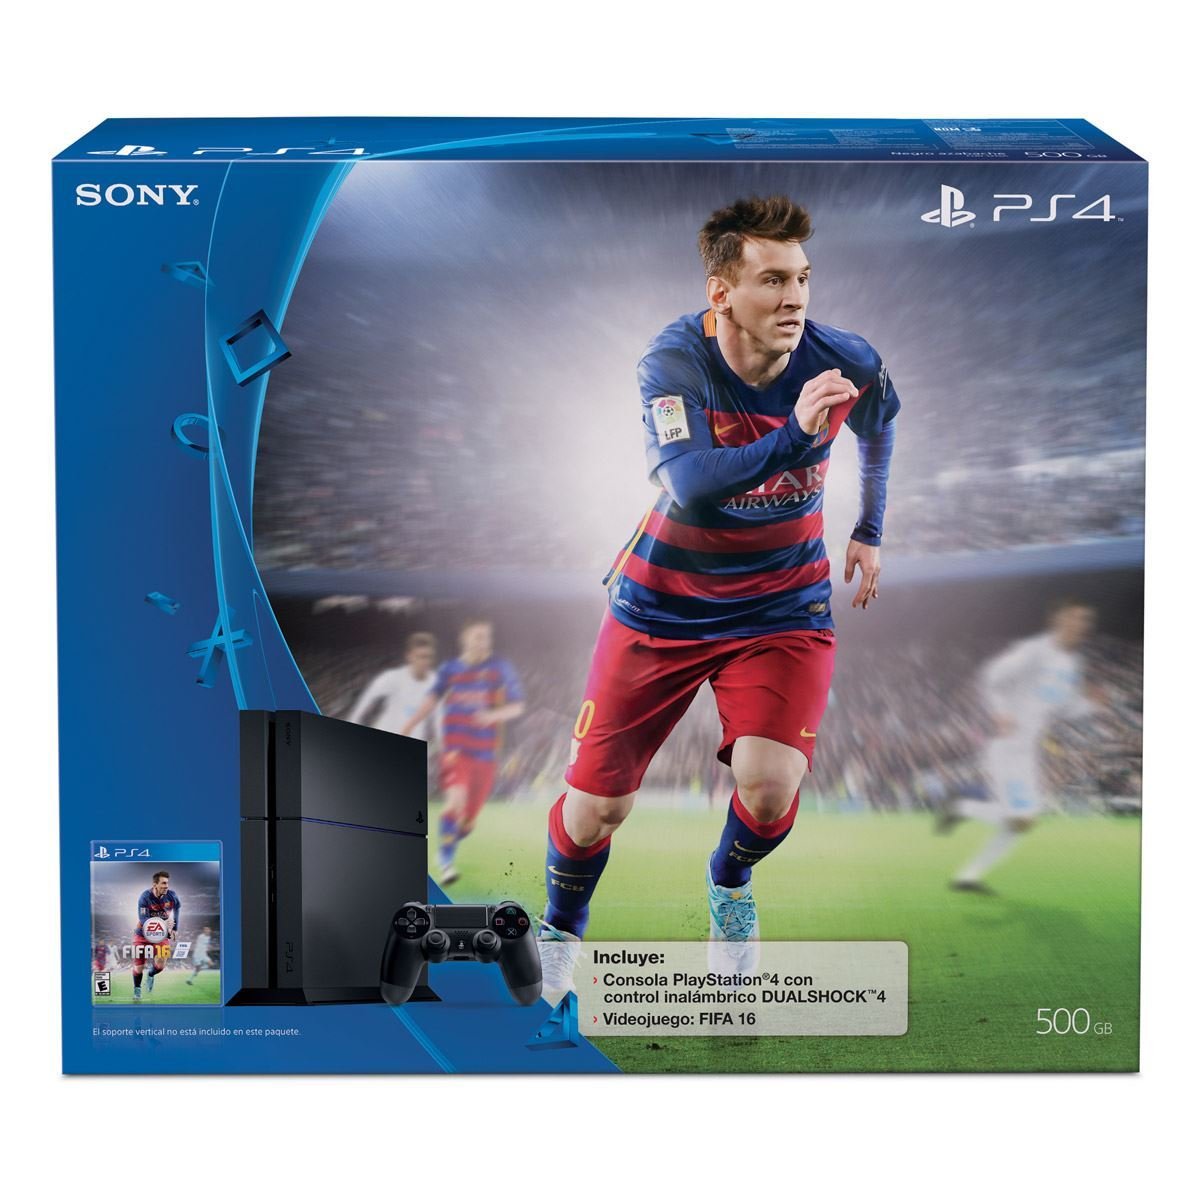 Consola PS4 con FIFA 16